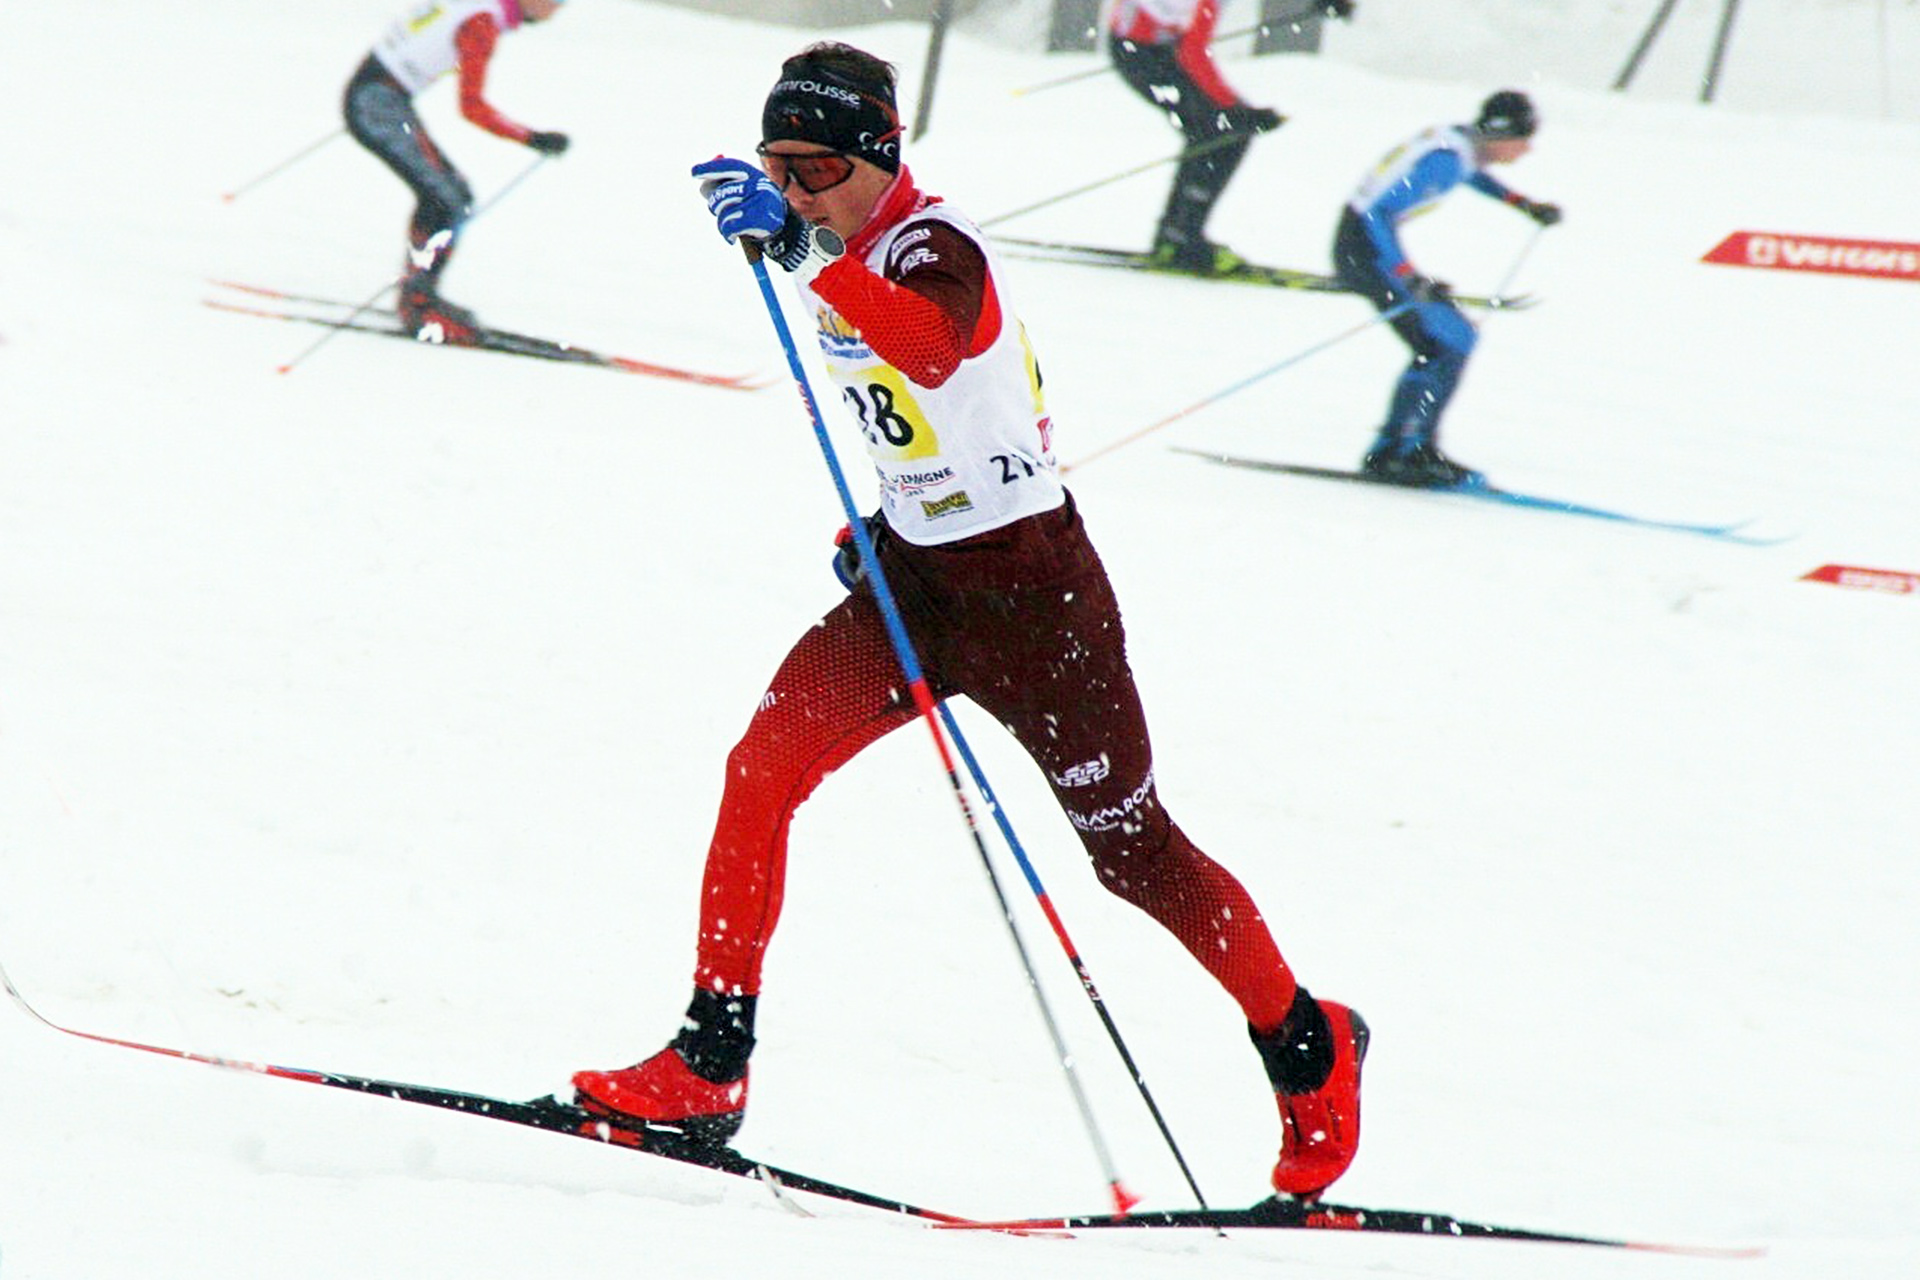 Chamrousse basile bunoz athlète sportif ski fond club snbc station ski montagne grenoble isère alpes france - © Bunoz